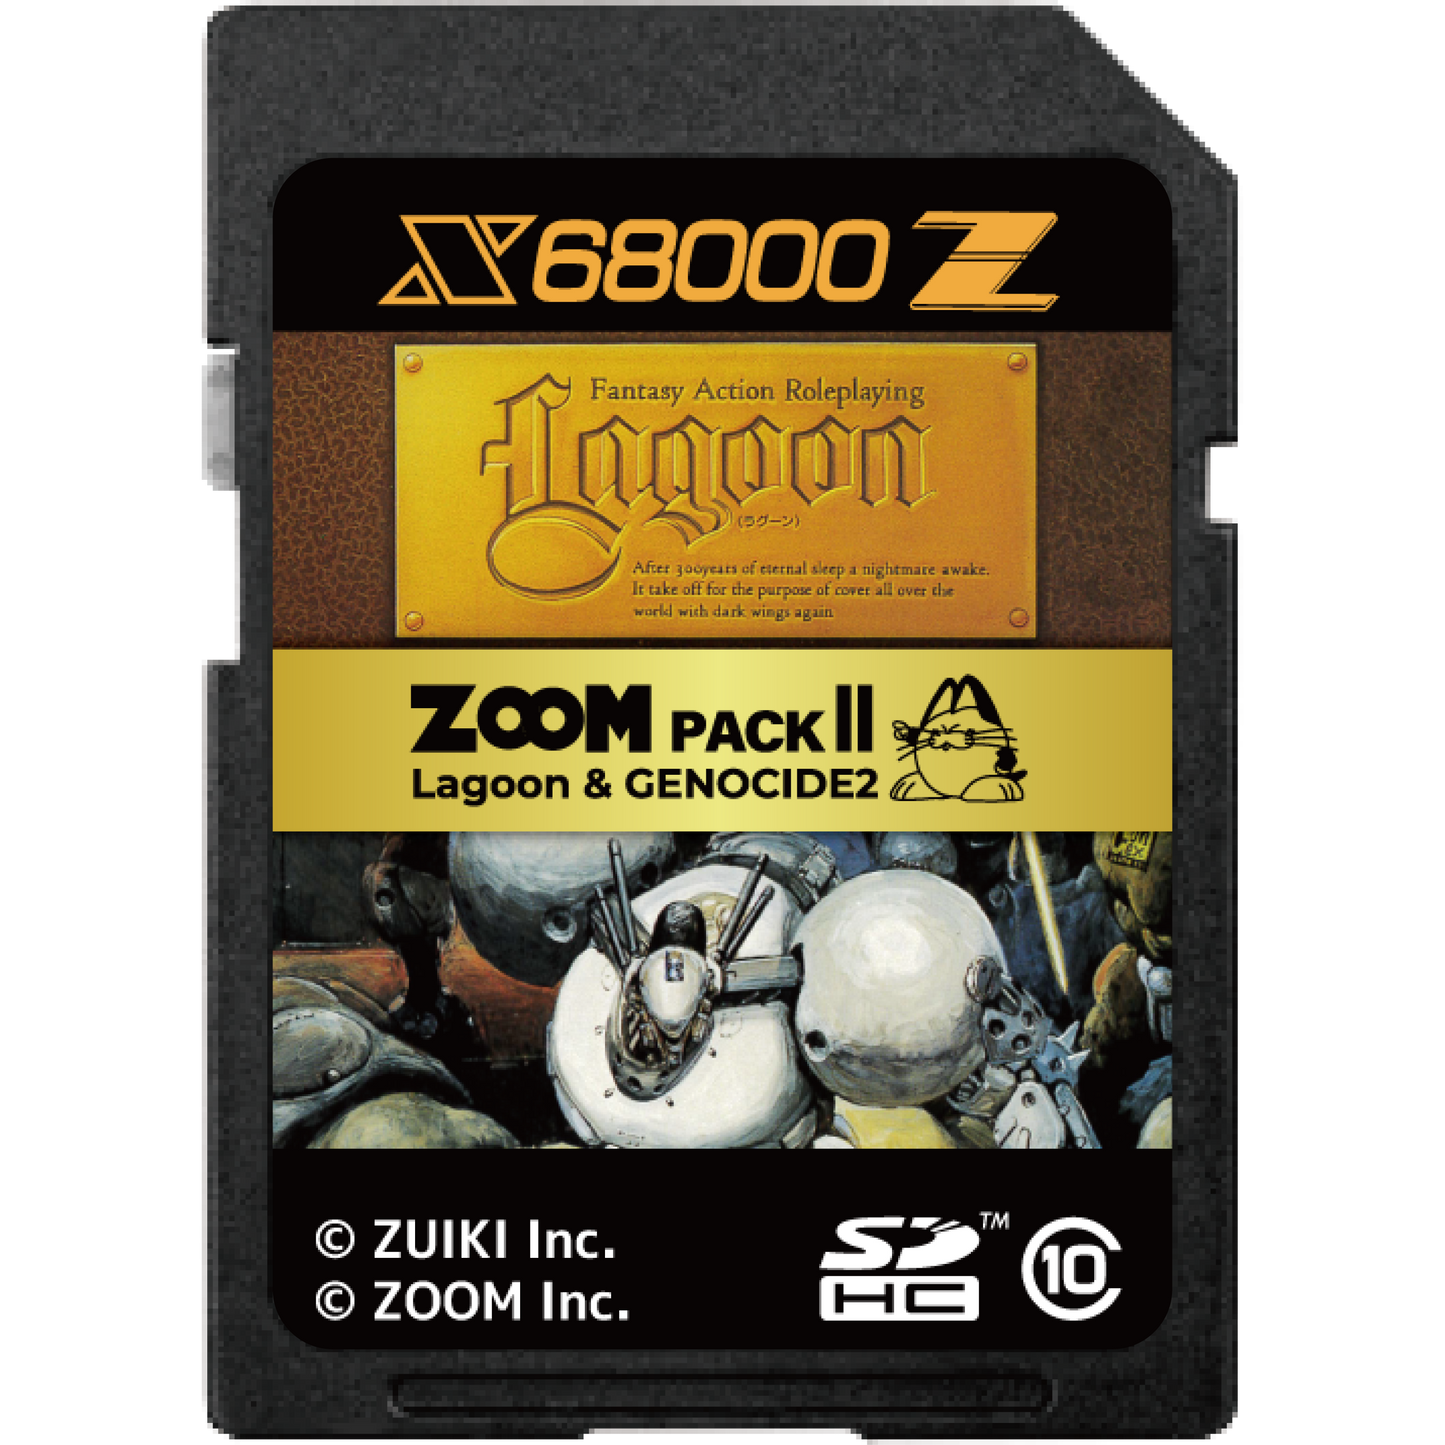 ZUIKI X68000 Z Lagoon / Genocide 2 ZOOM PACK Ⅱ Japan NEW